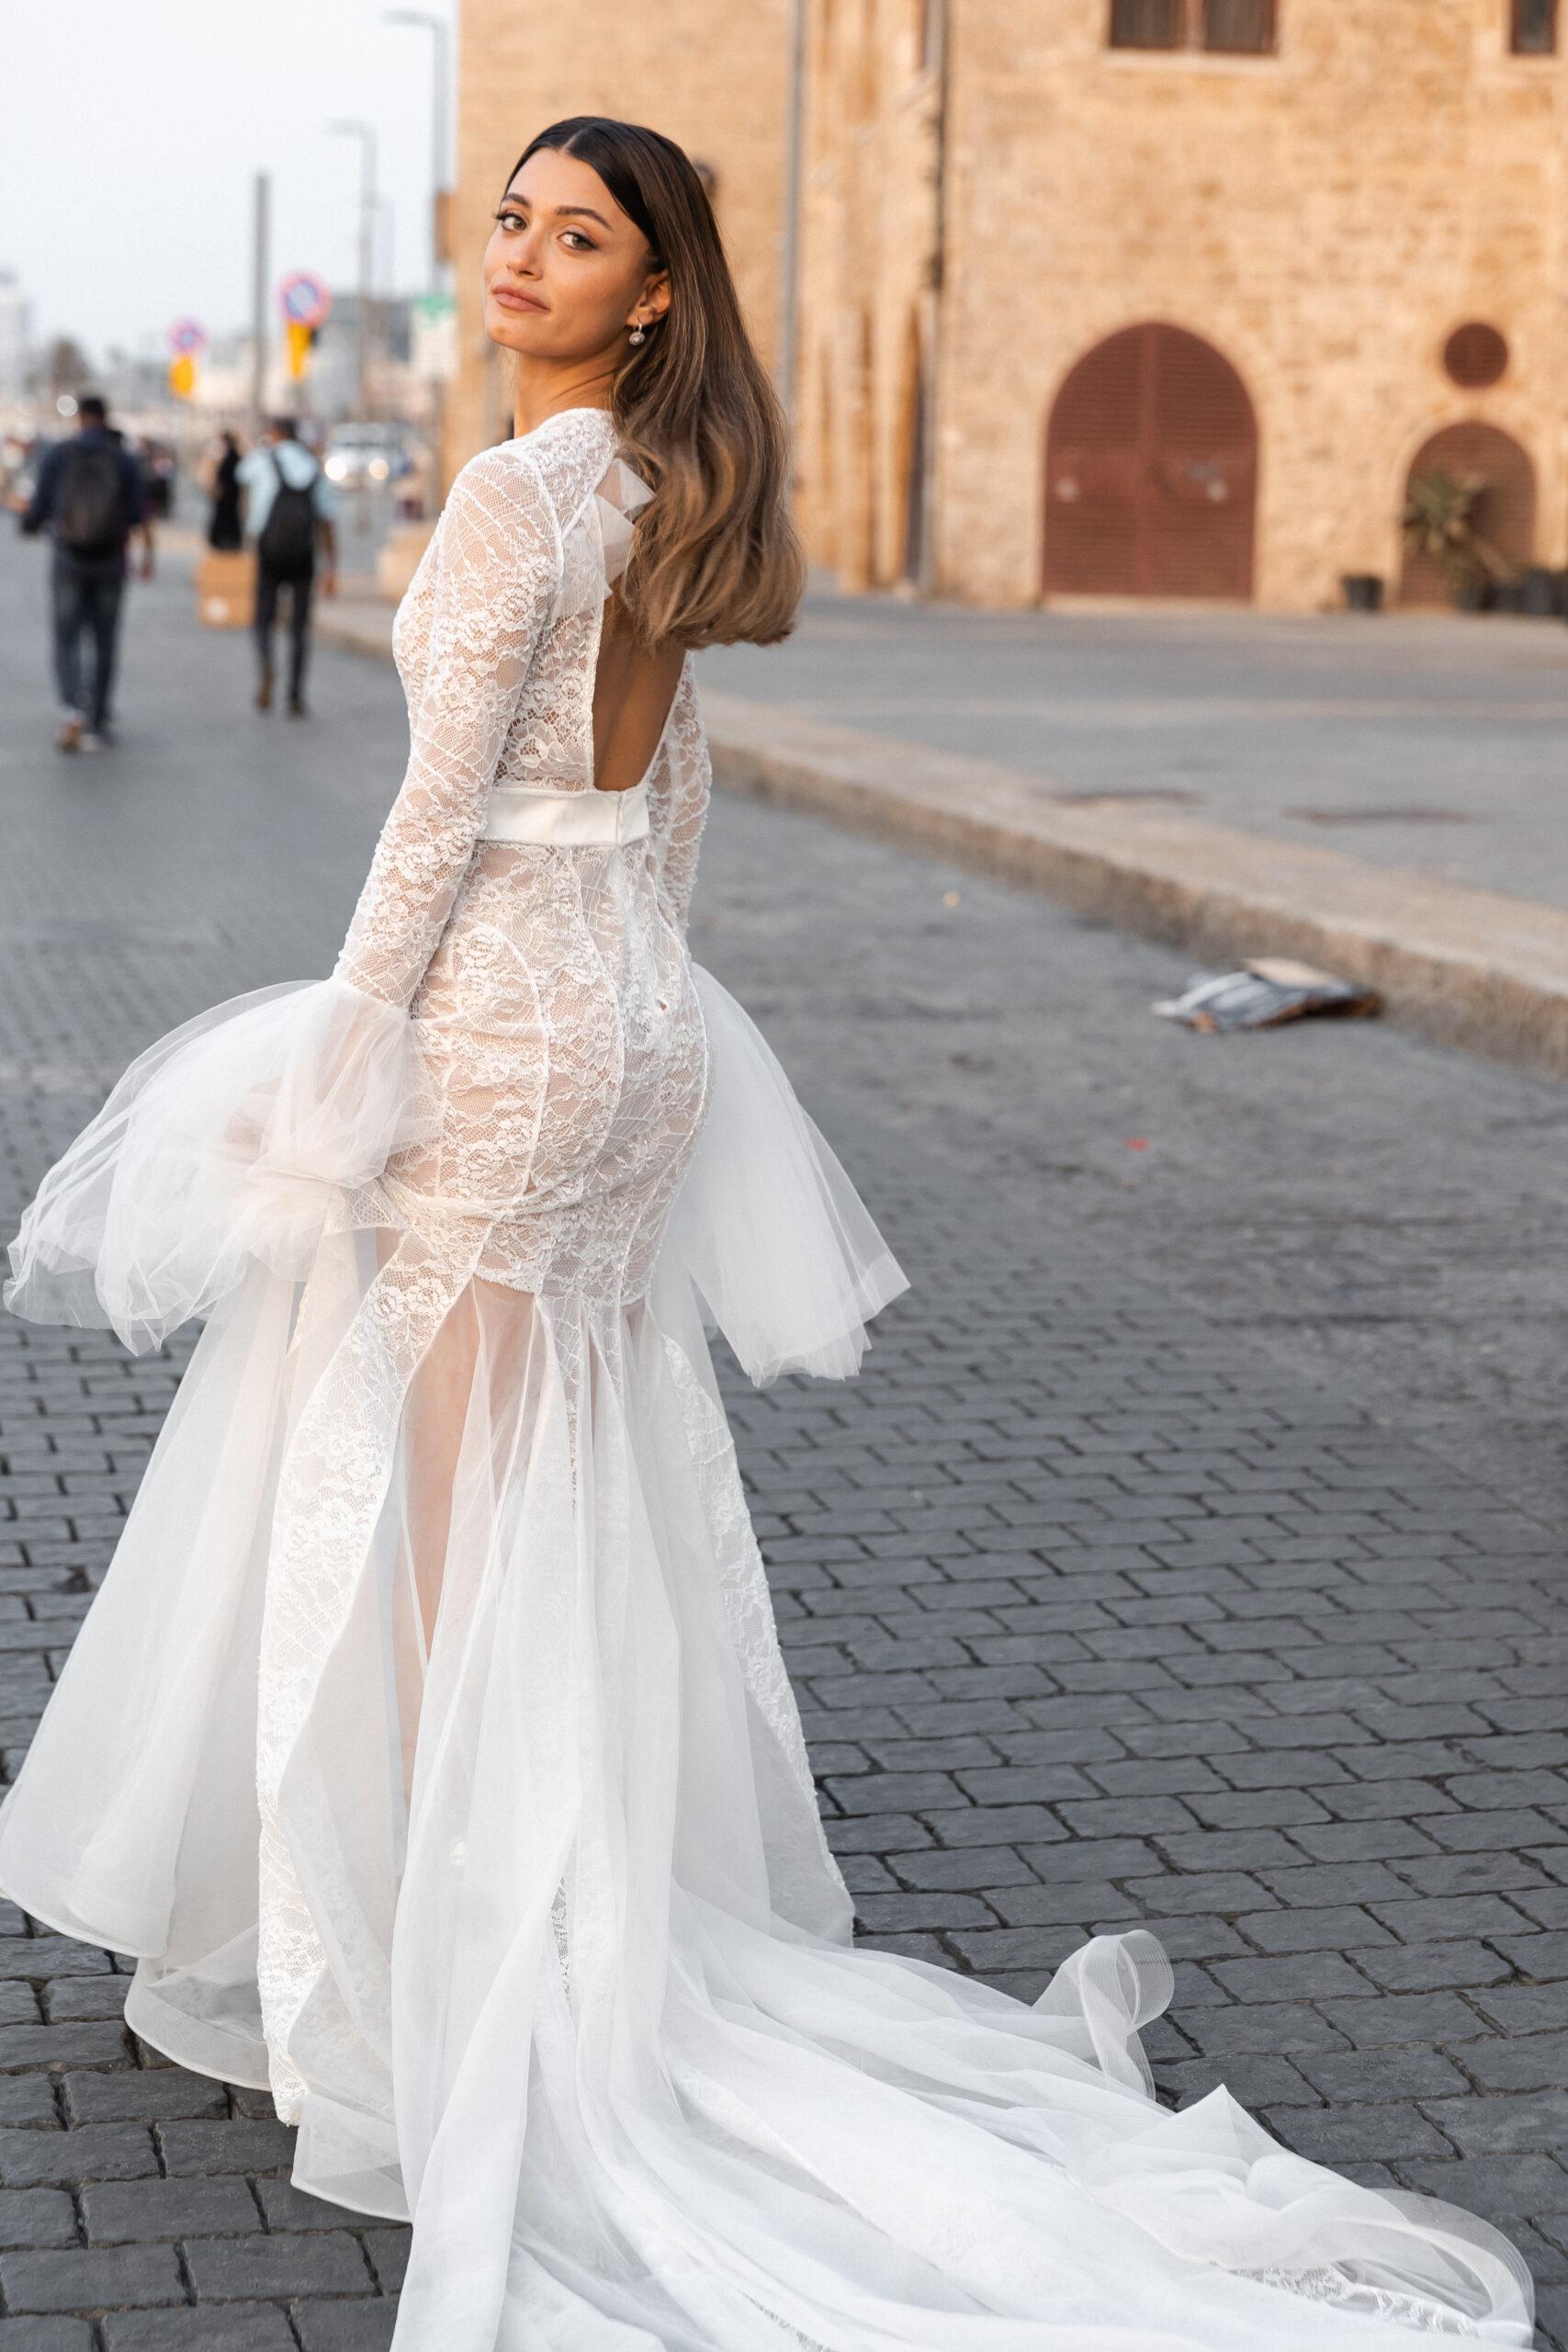 Sophie Turner's wedding dress took over 350 hours to design